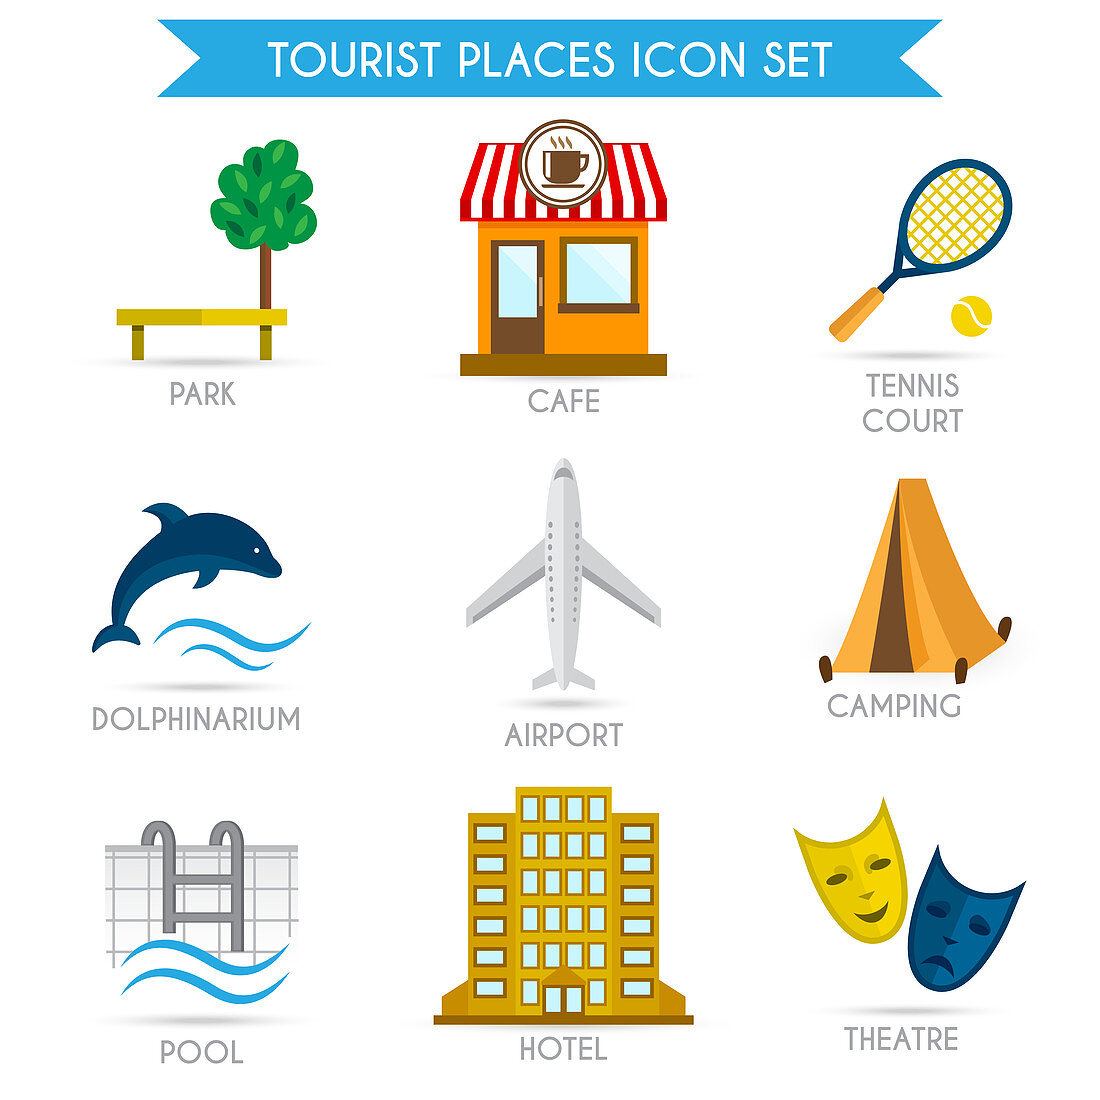 Tourism icons, illustration